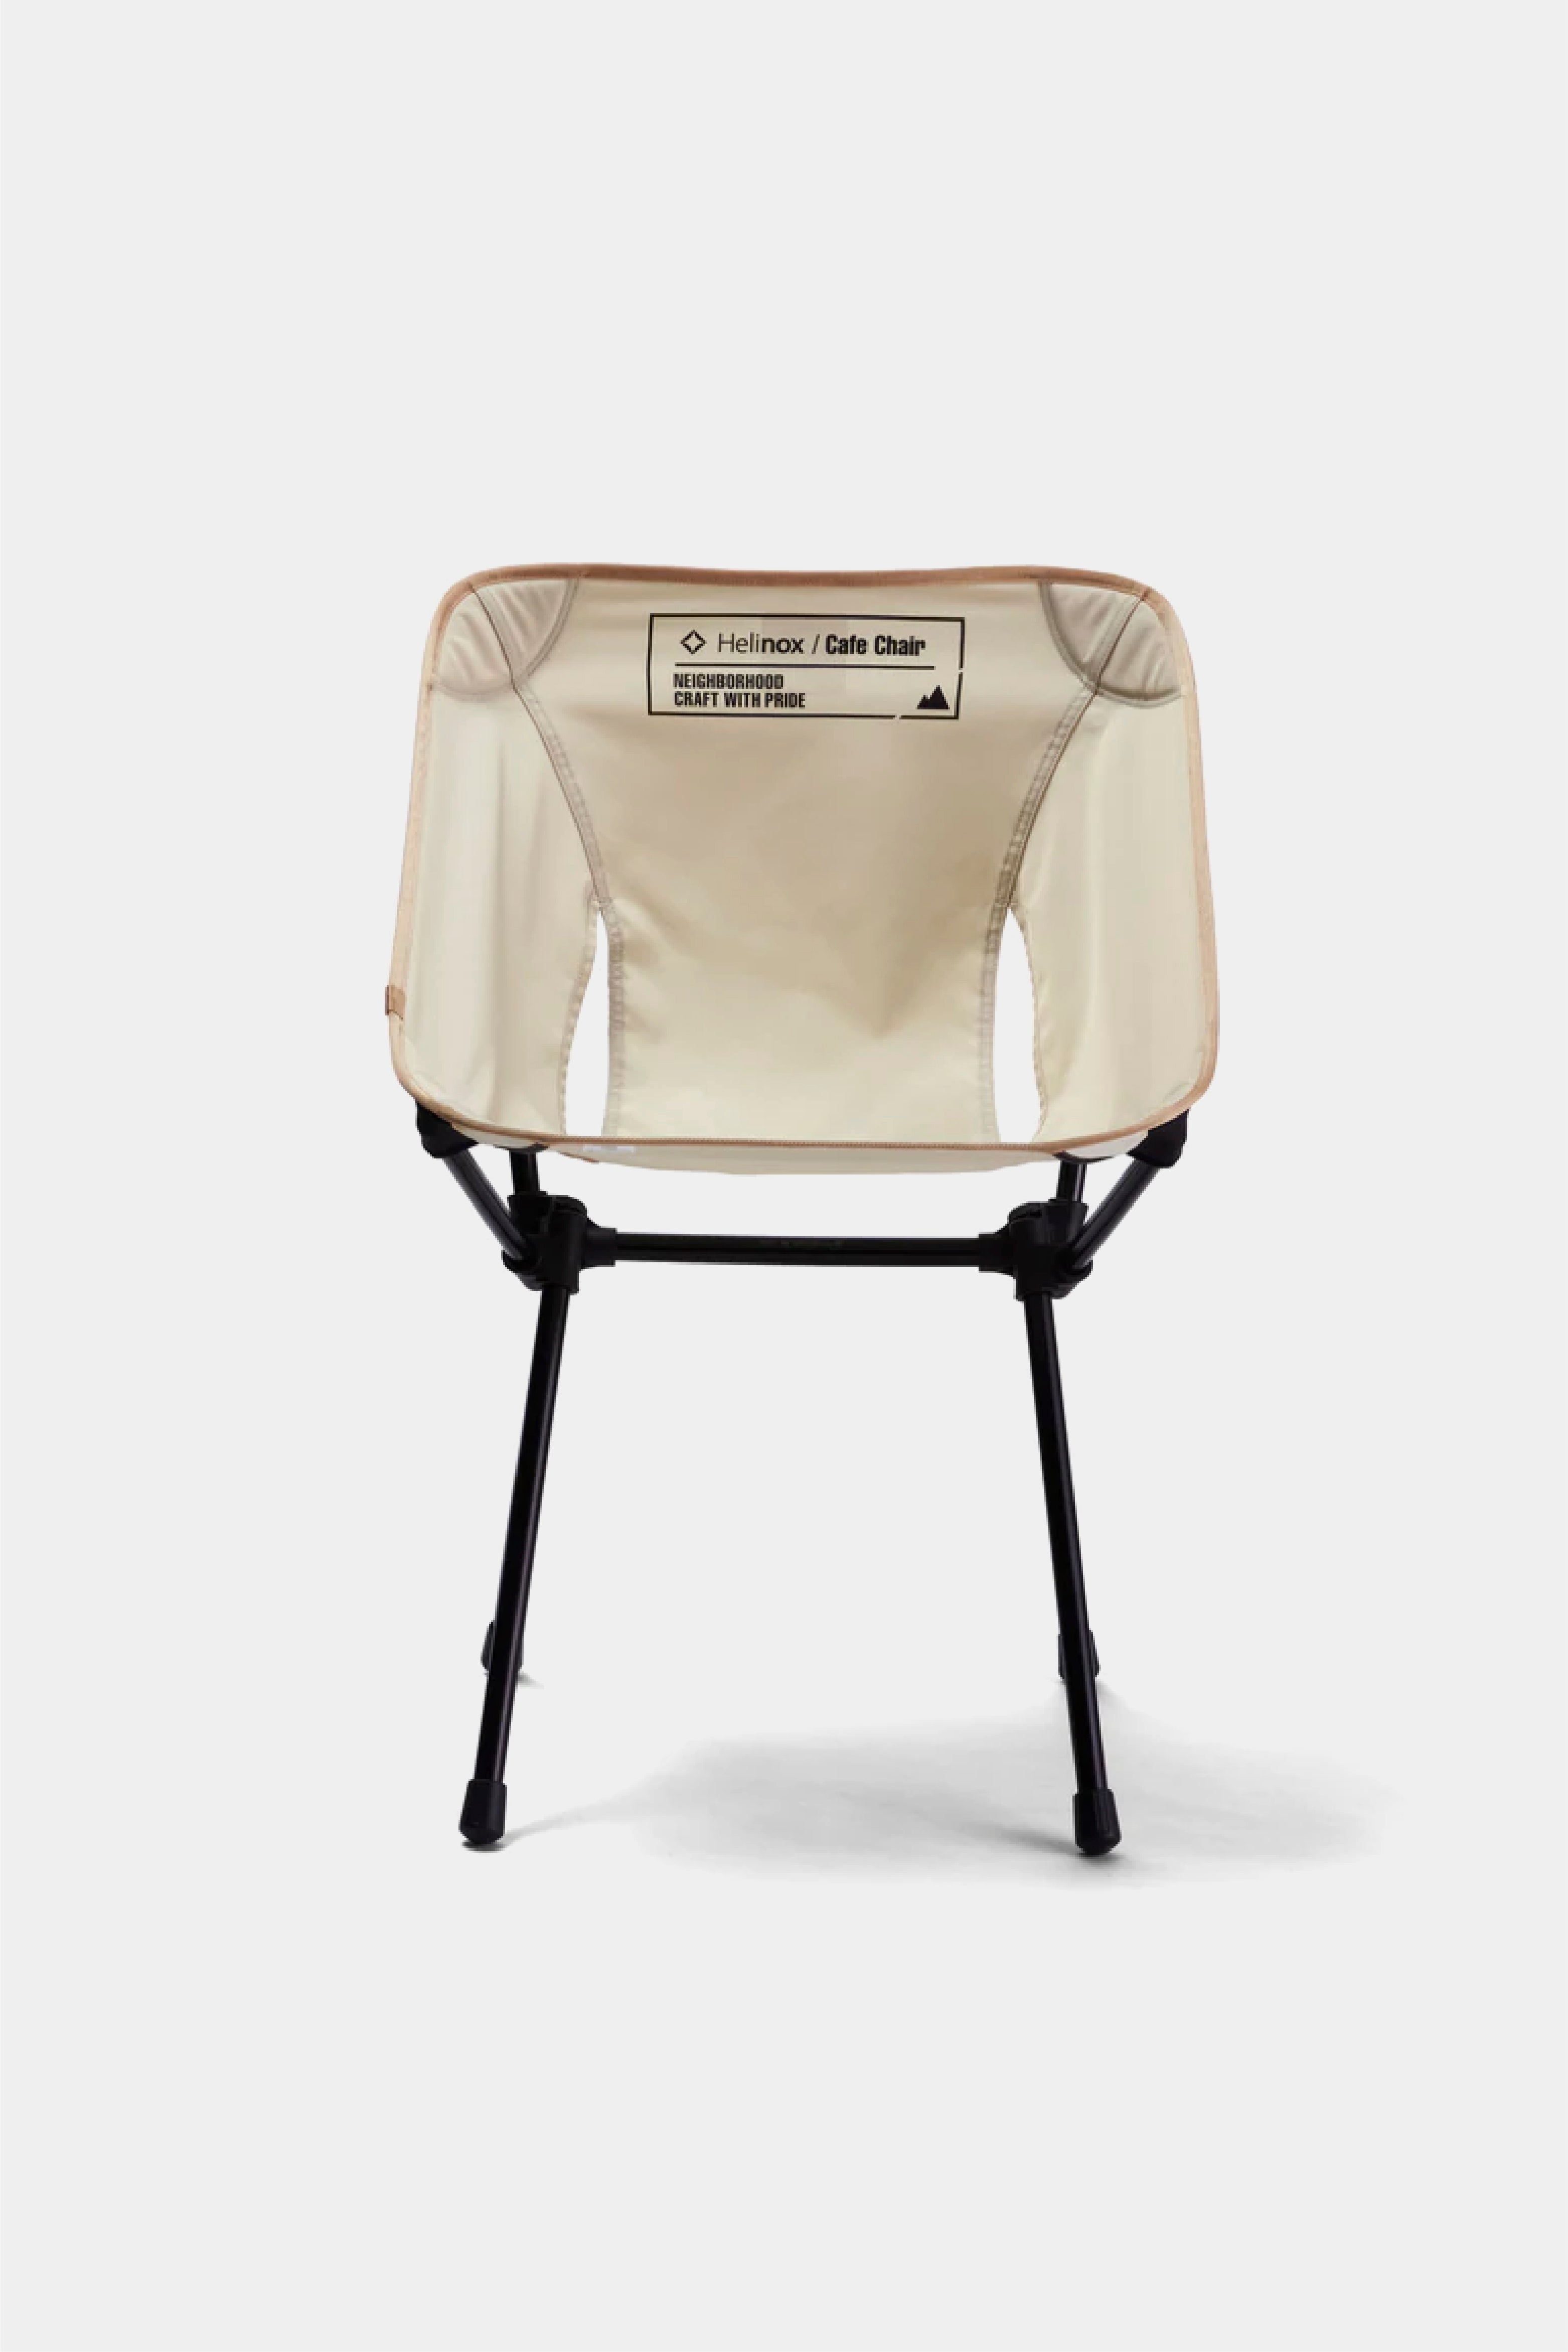 HX / E-Cafe Camp Chair